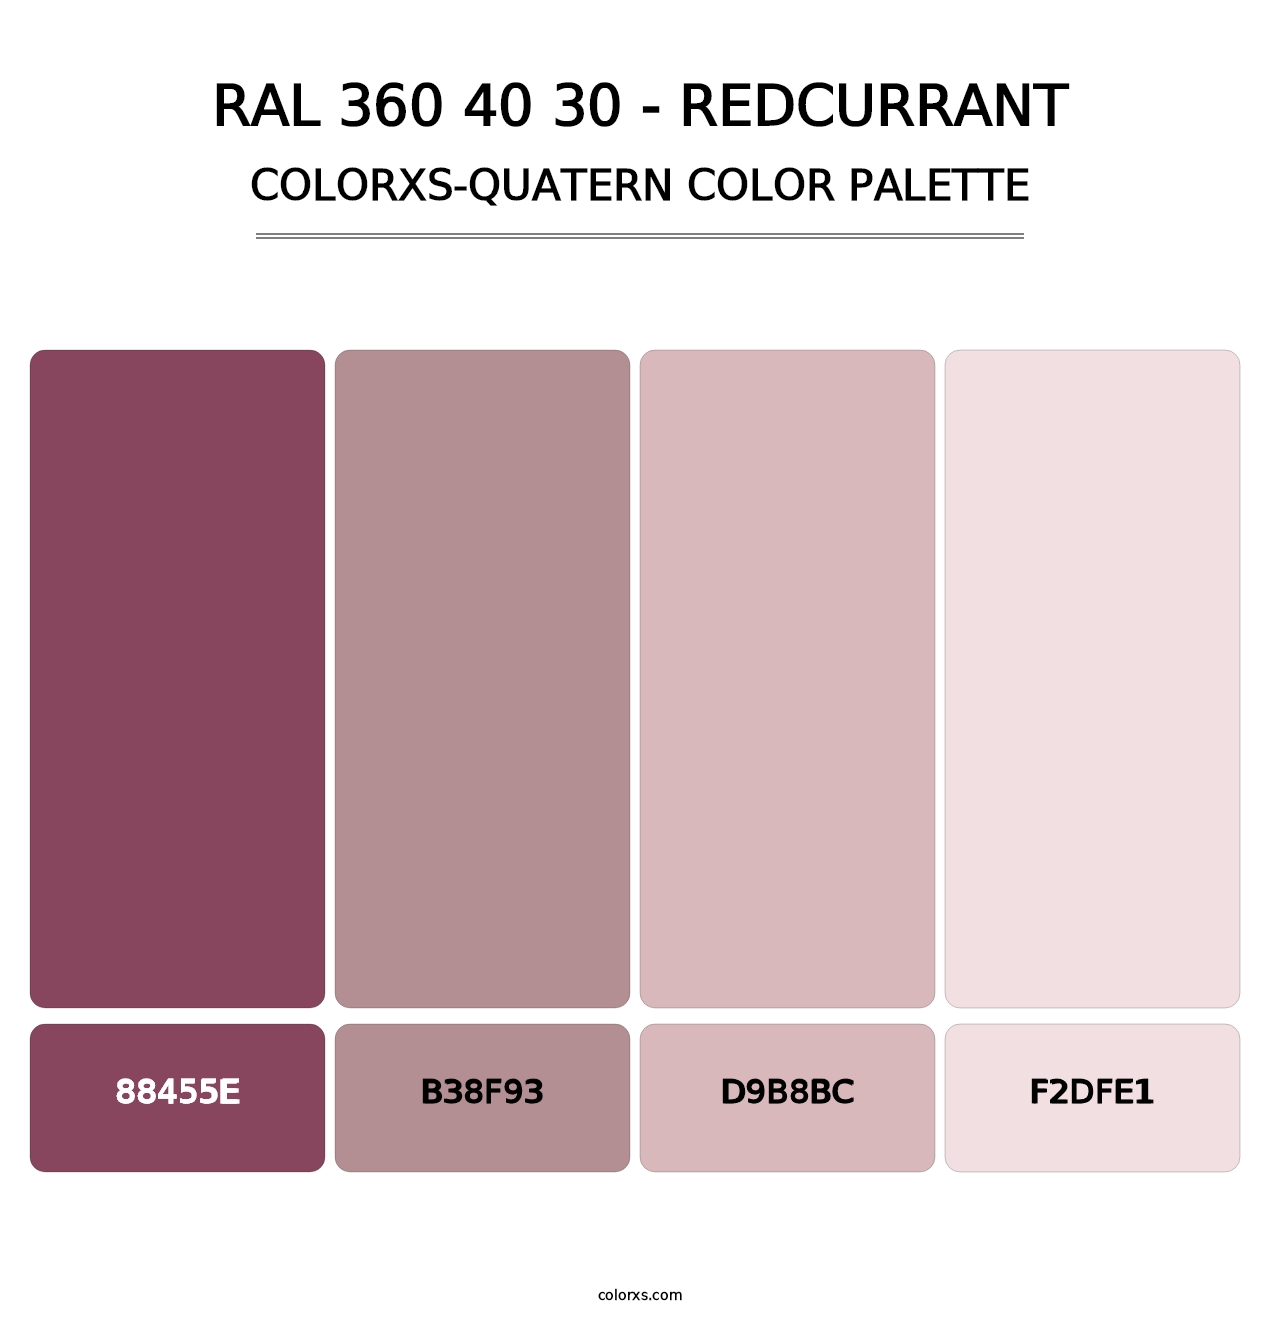 RAL 360 40 30 - Redcurrant - Colorxs Quatern Palette